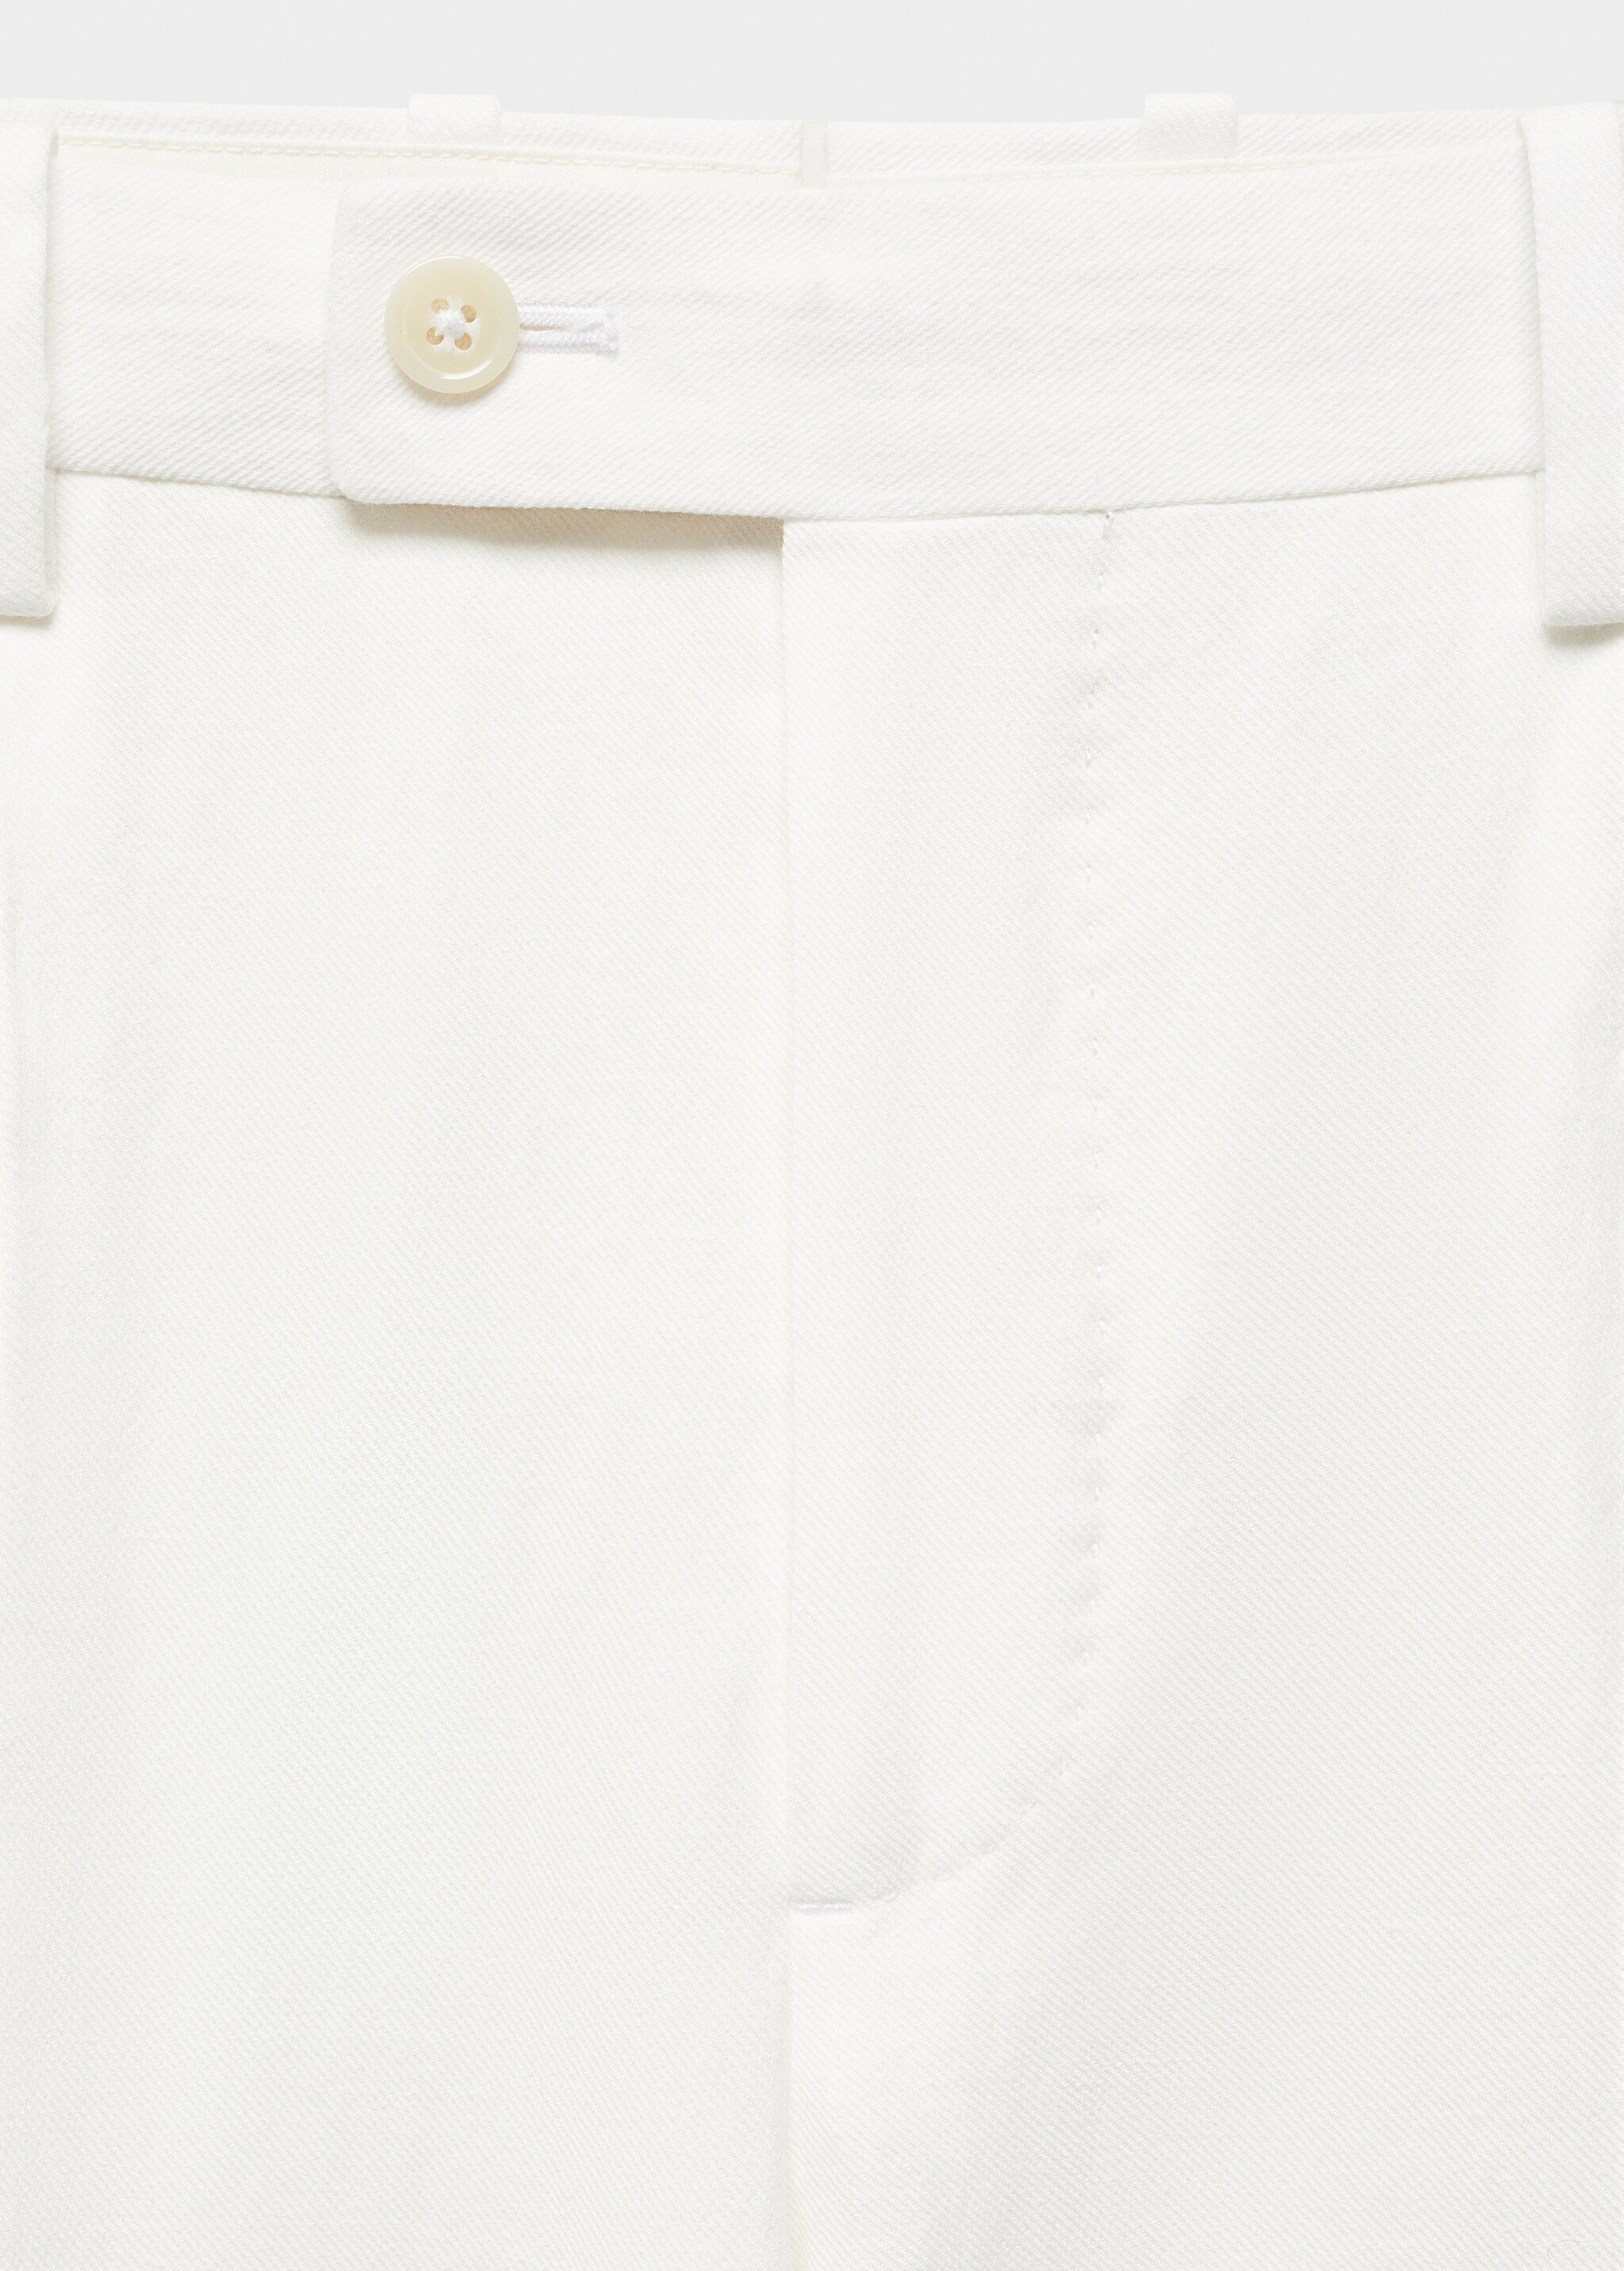 Slim fit cotton and linen suit pants - Details of the article 8